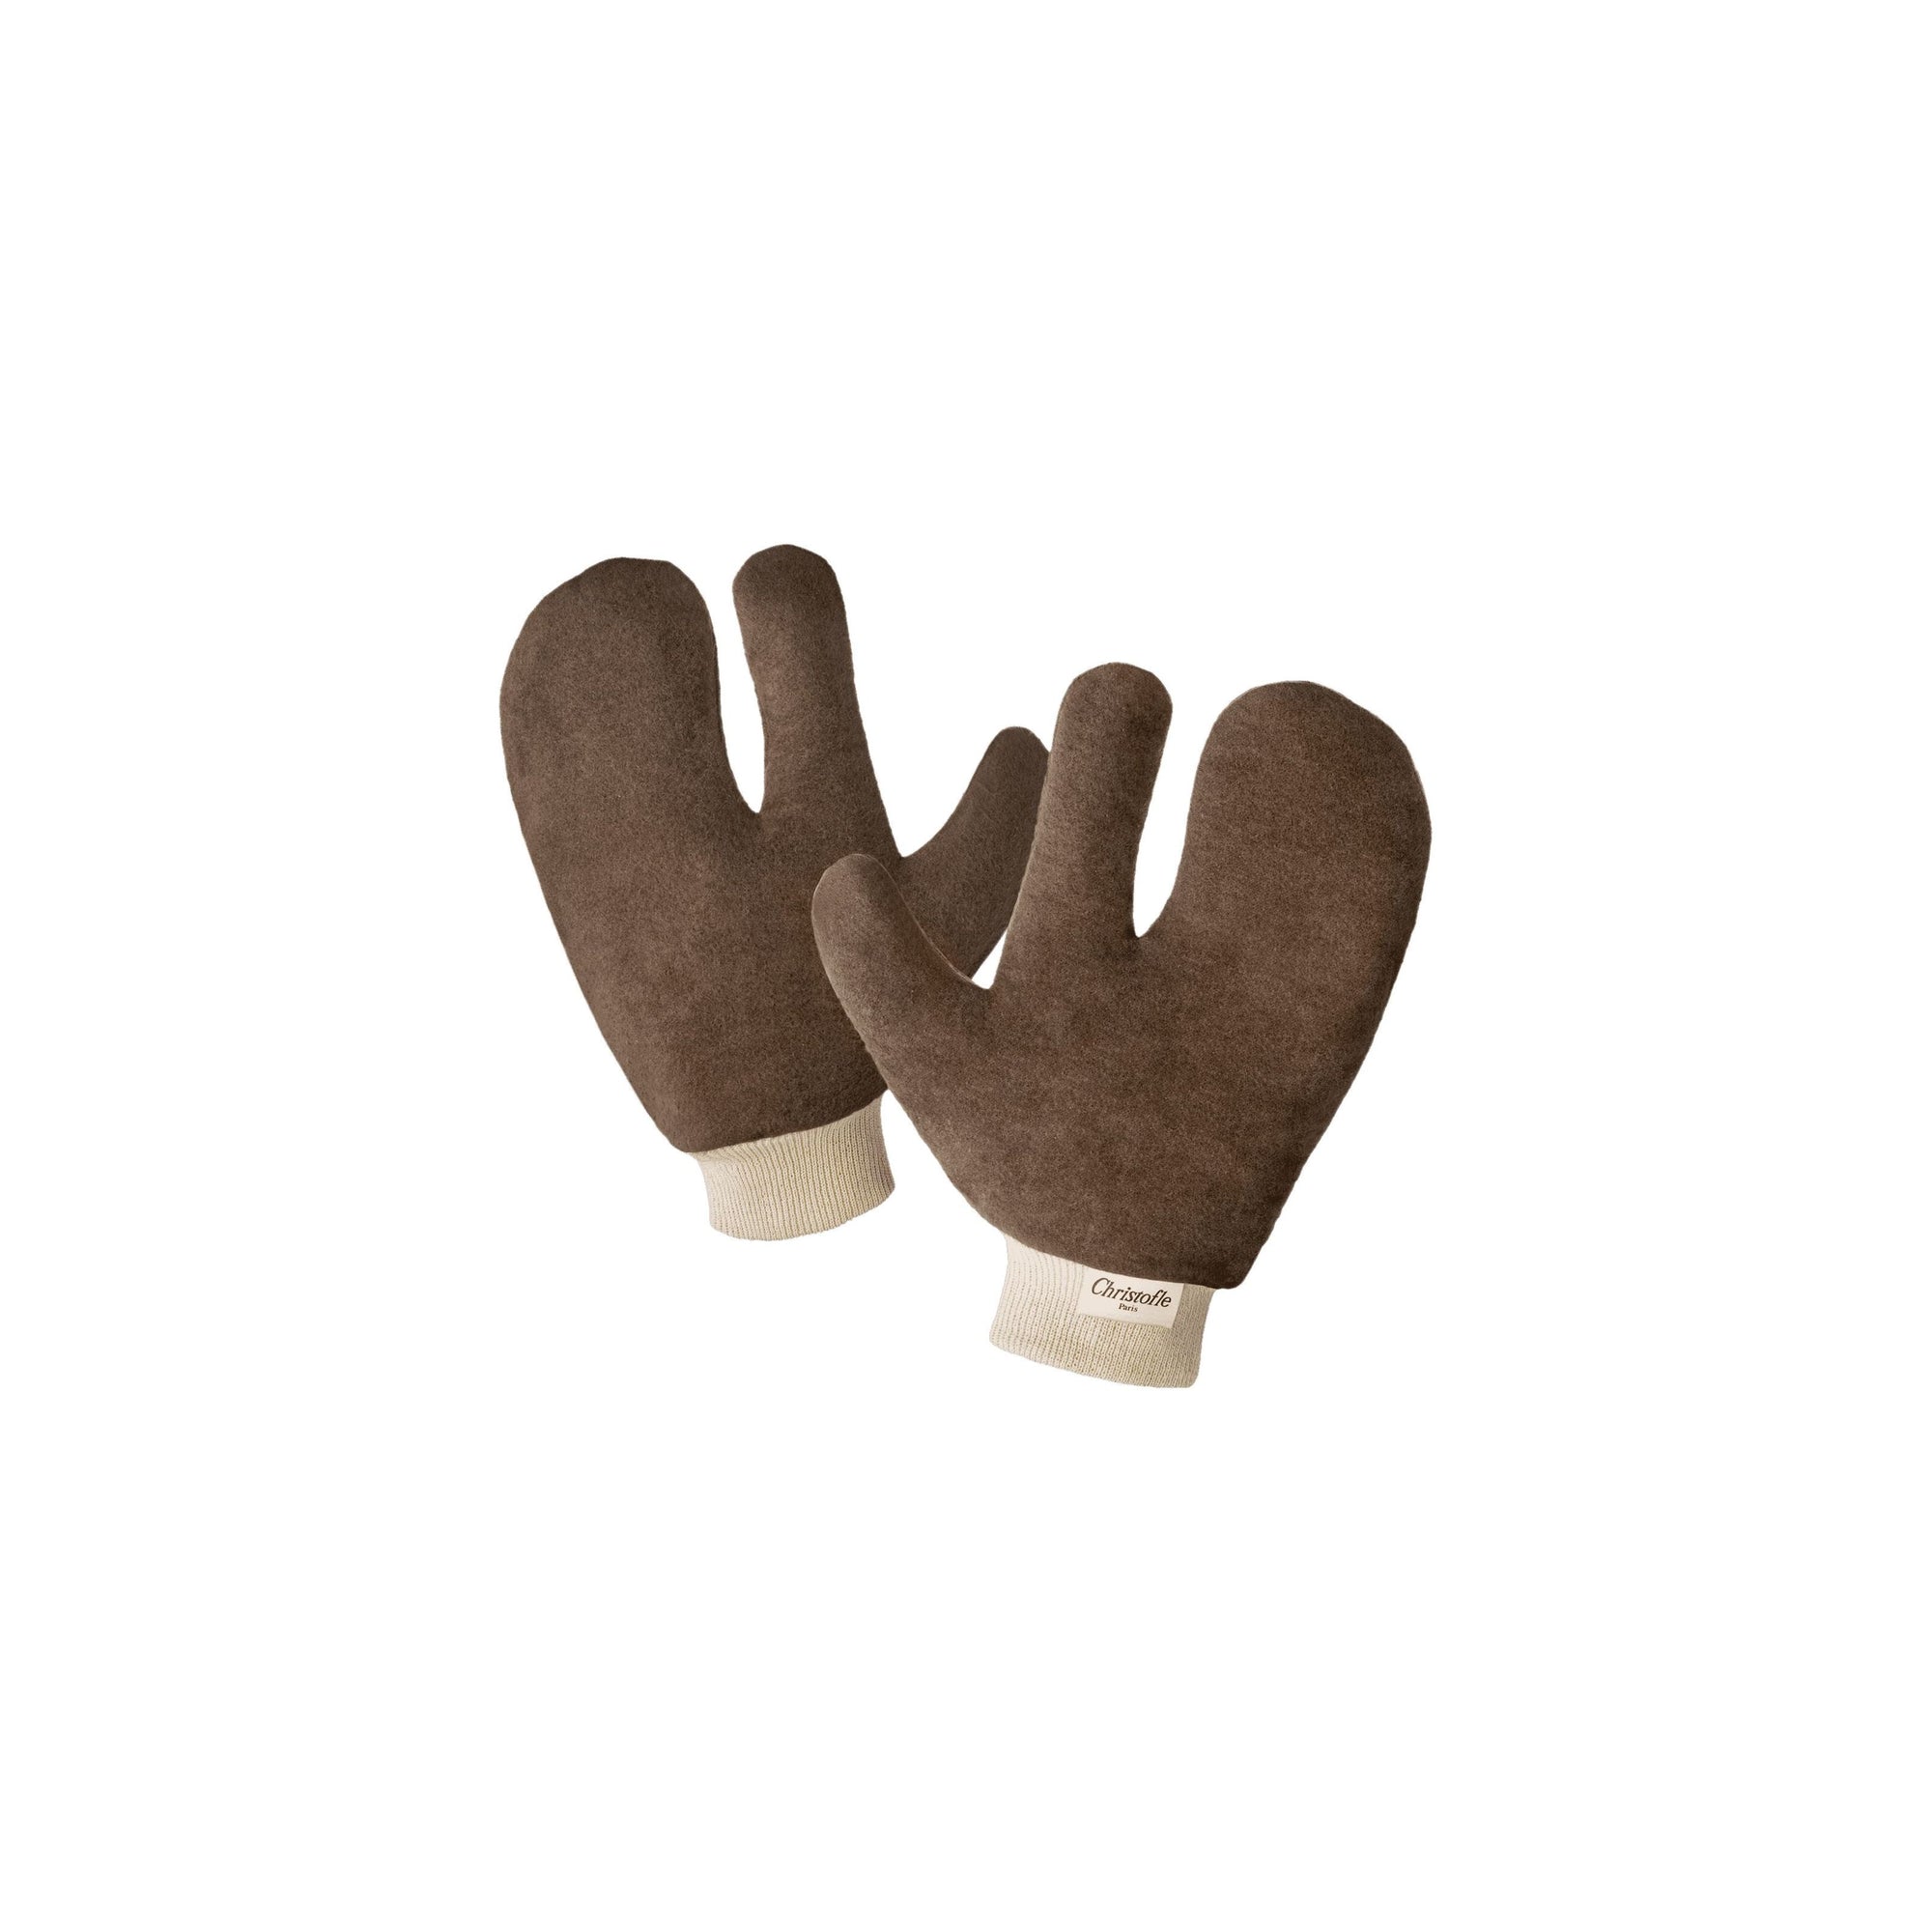 Christofle Silversmith Gloves